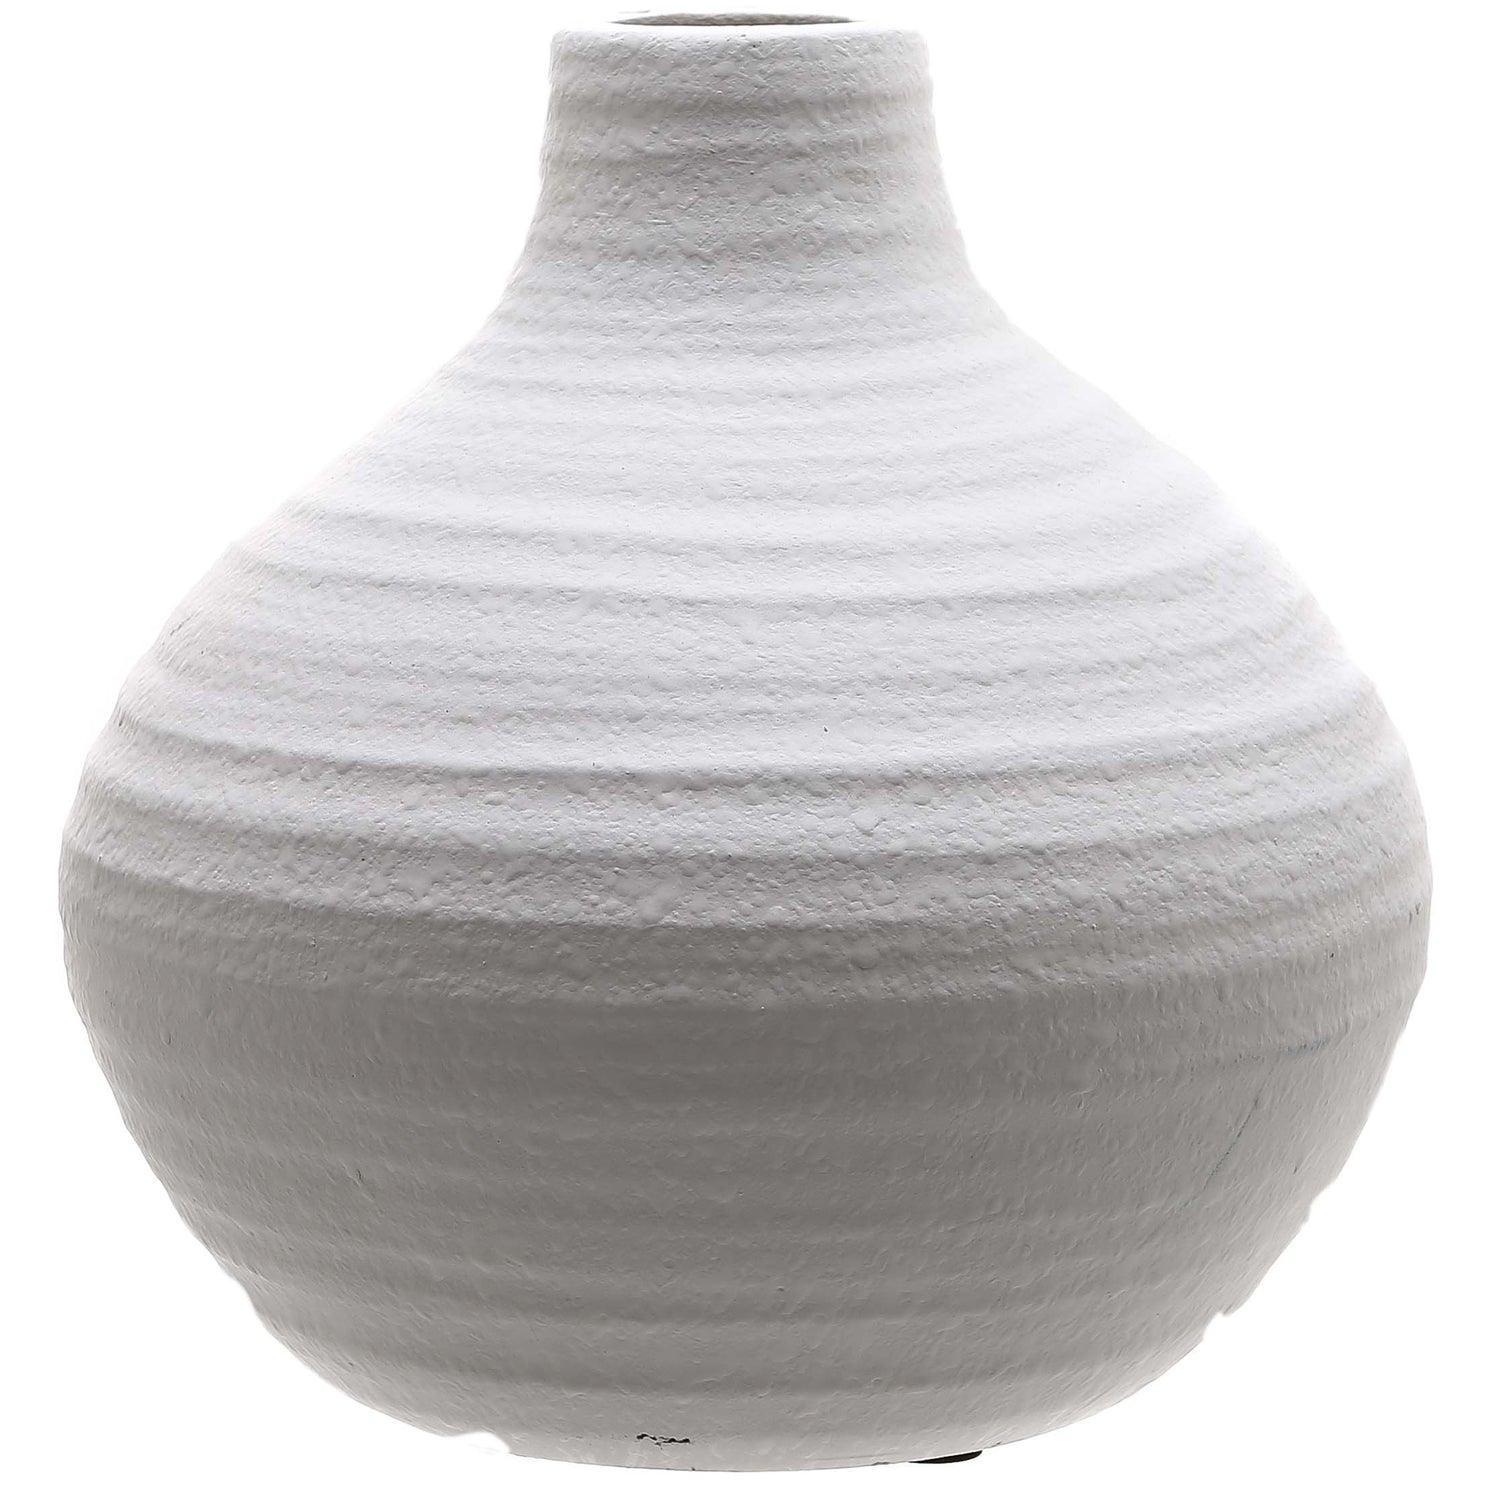 View Amphora Matt White Ceramic Vase information